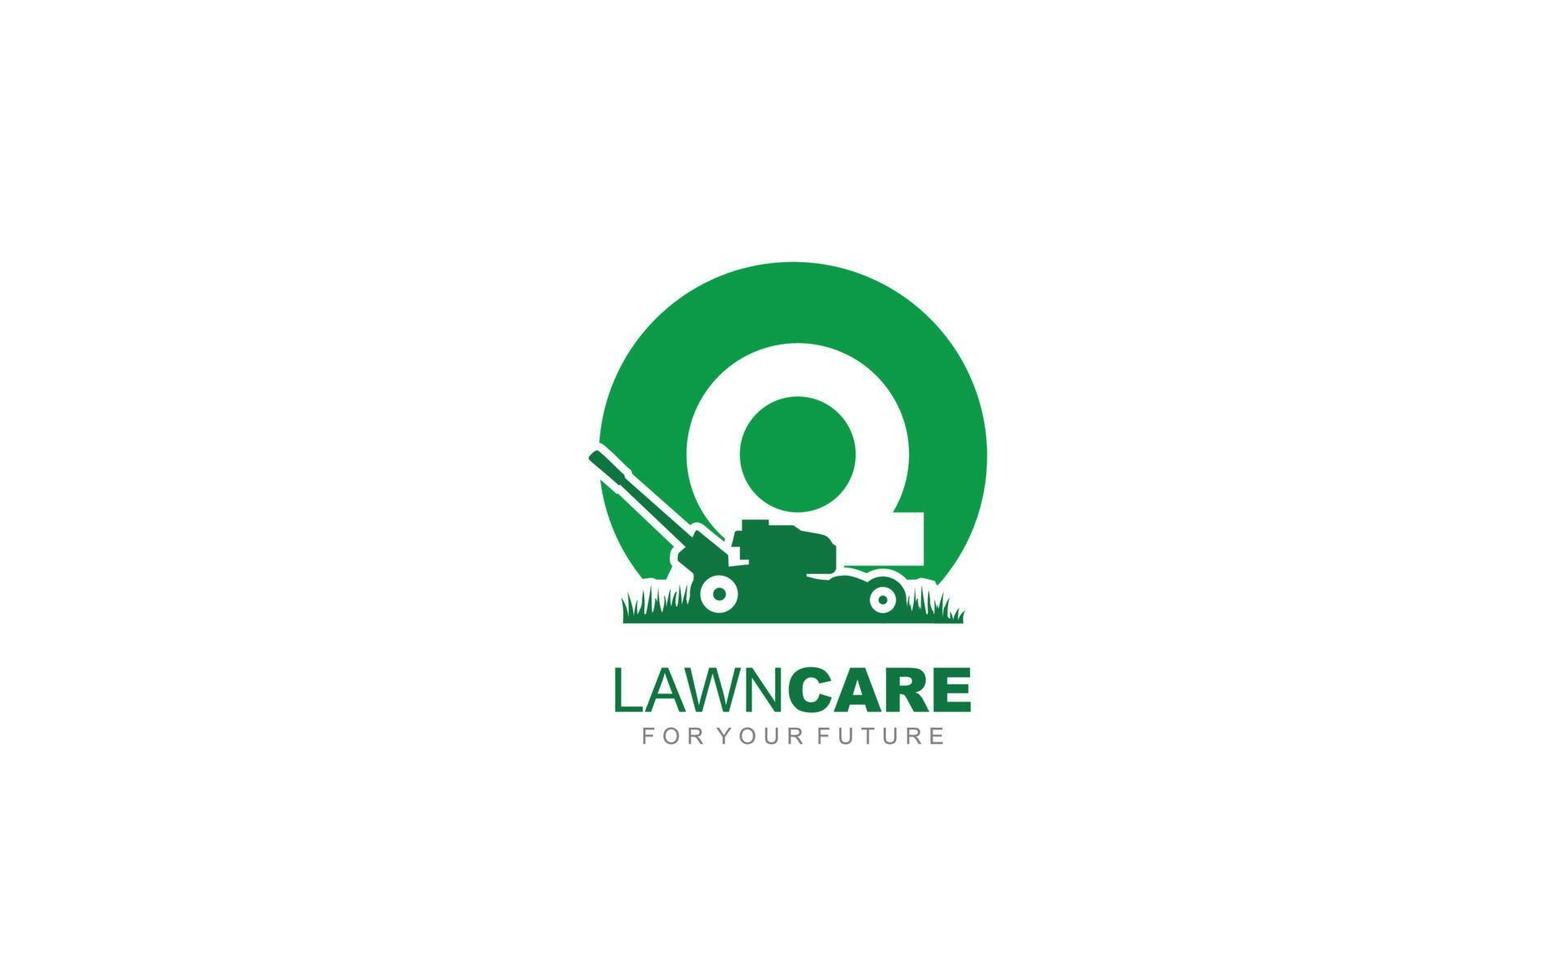 Q logo lawncare for branding company. mower template vector illustration for your brand.